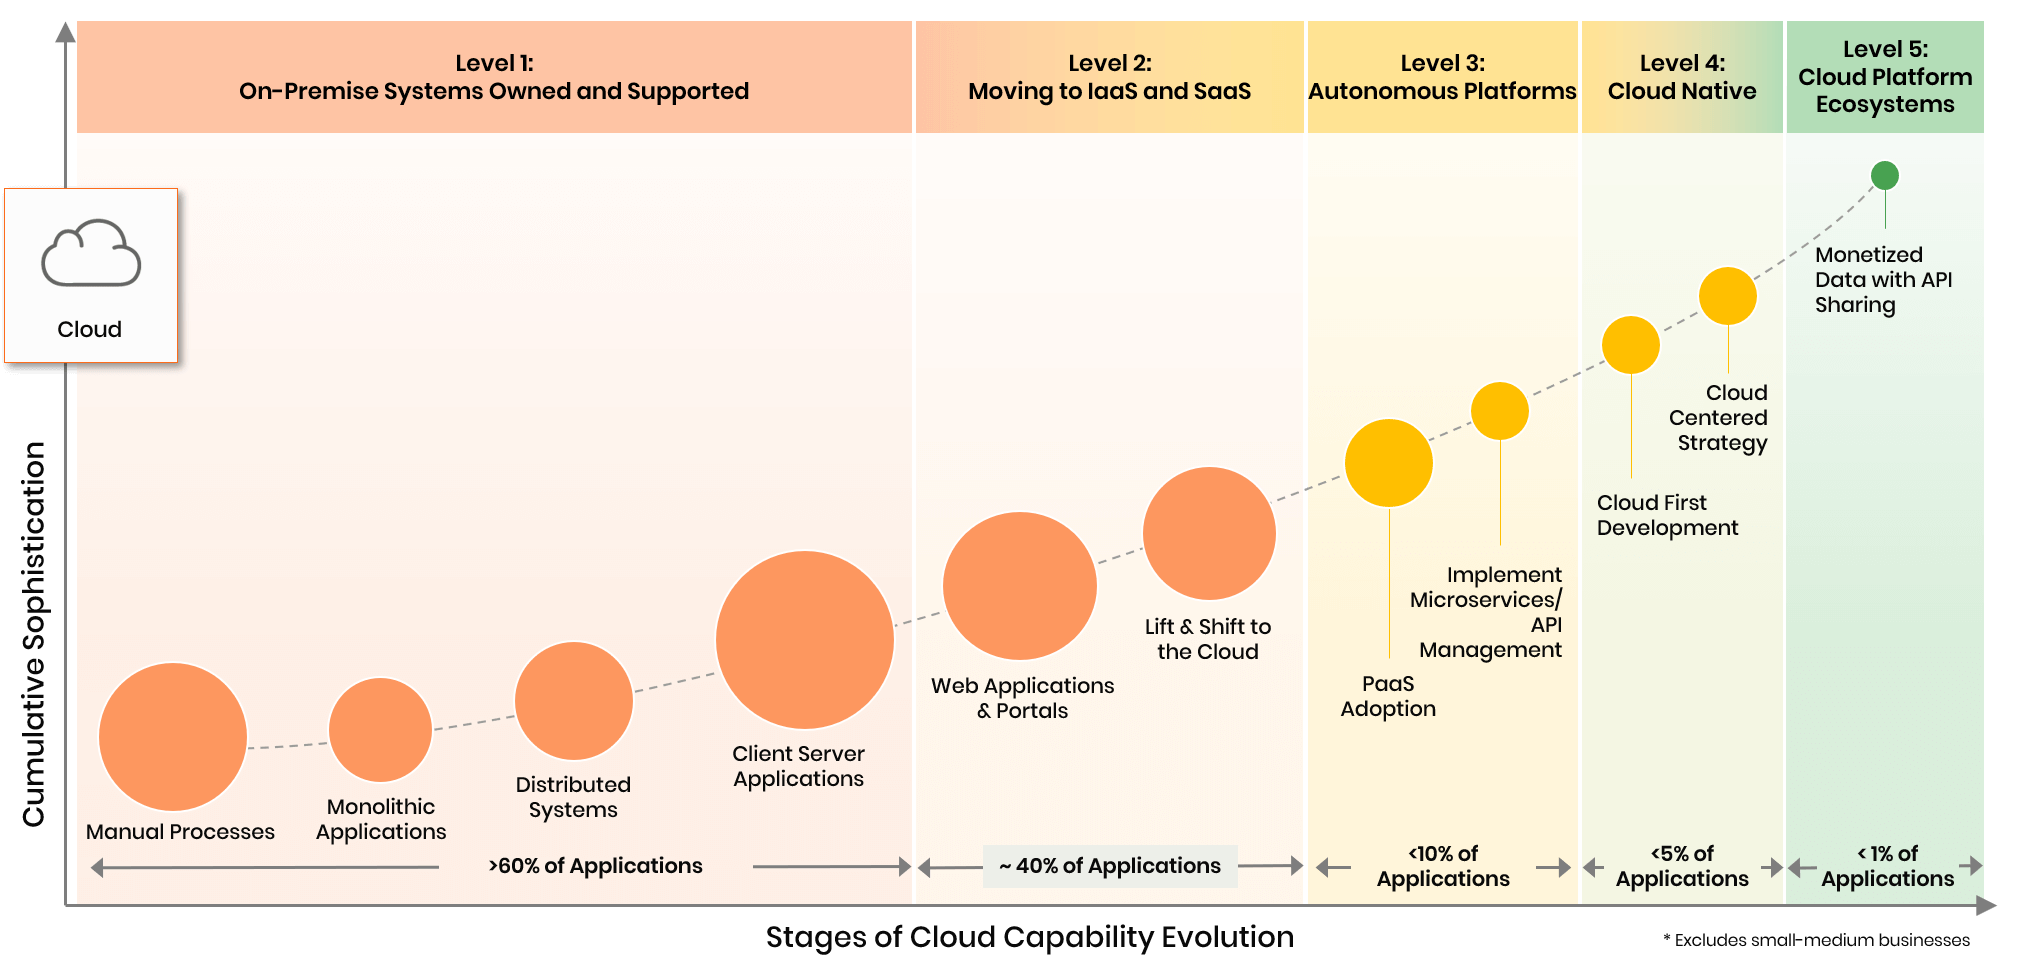 Digital Enterprise Evolution Model showing maturity stages of cloud capability.